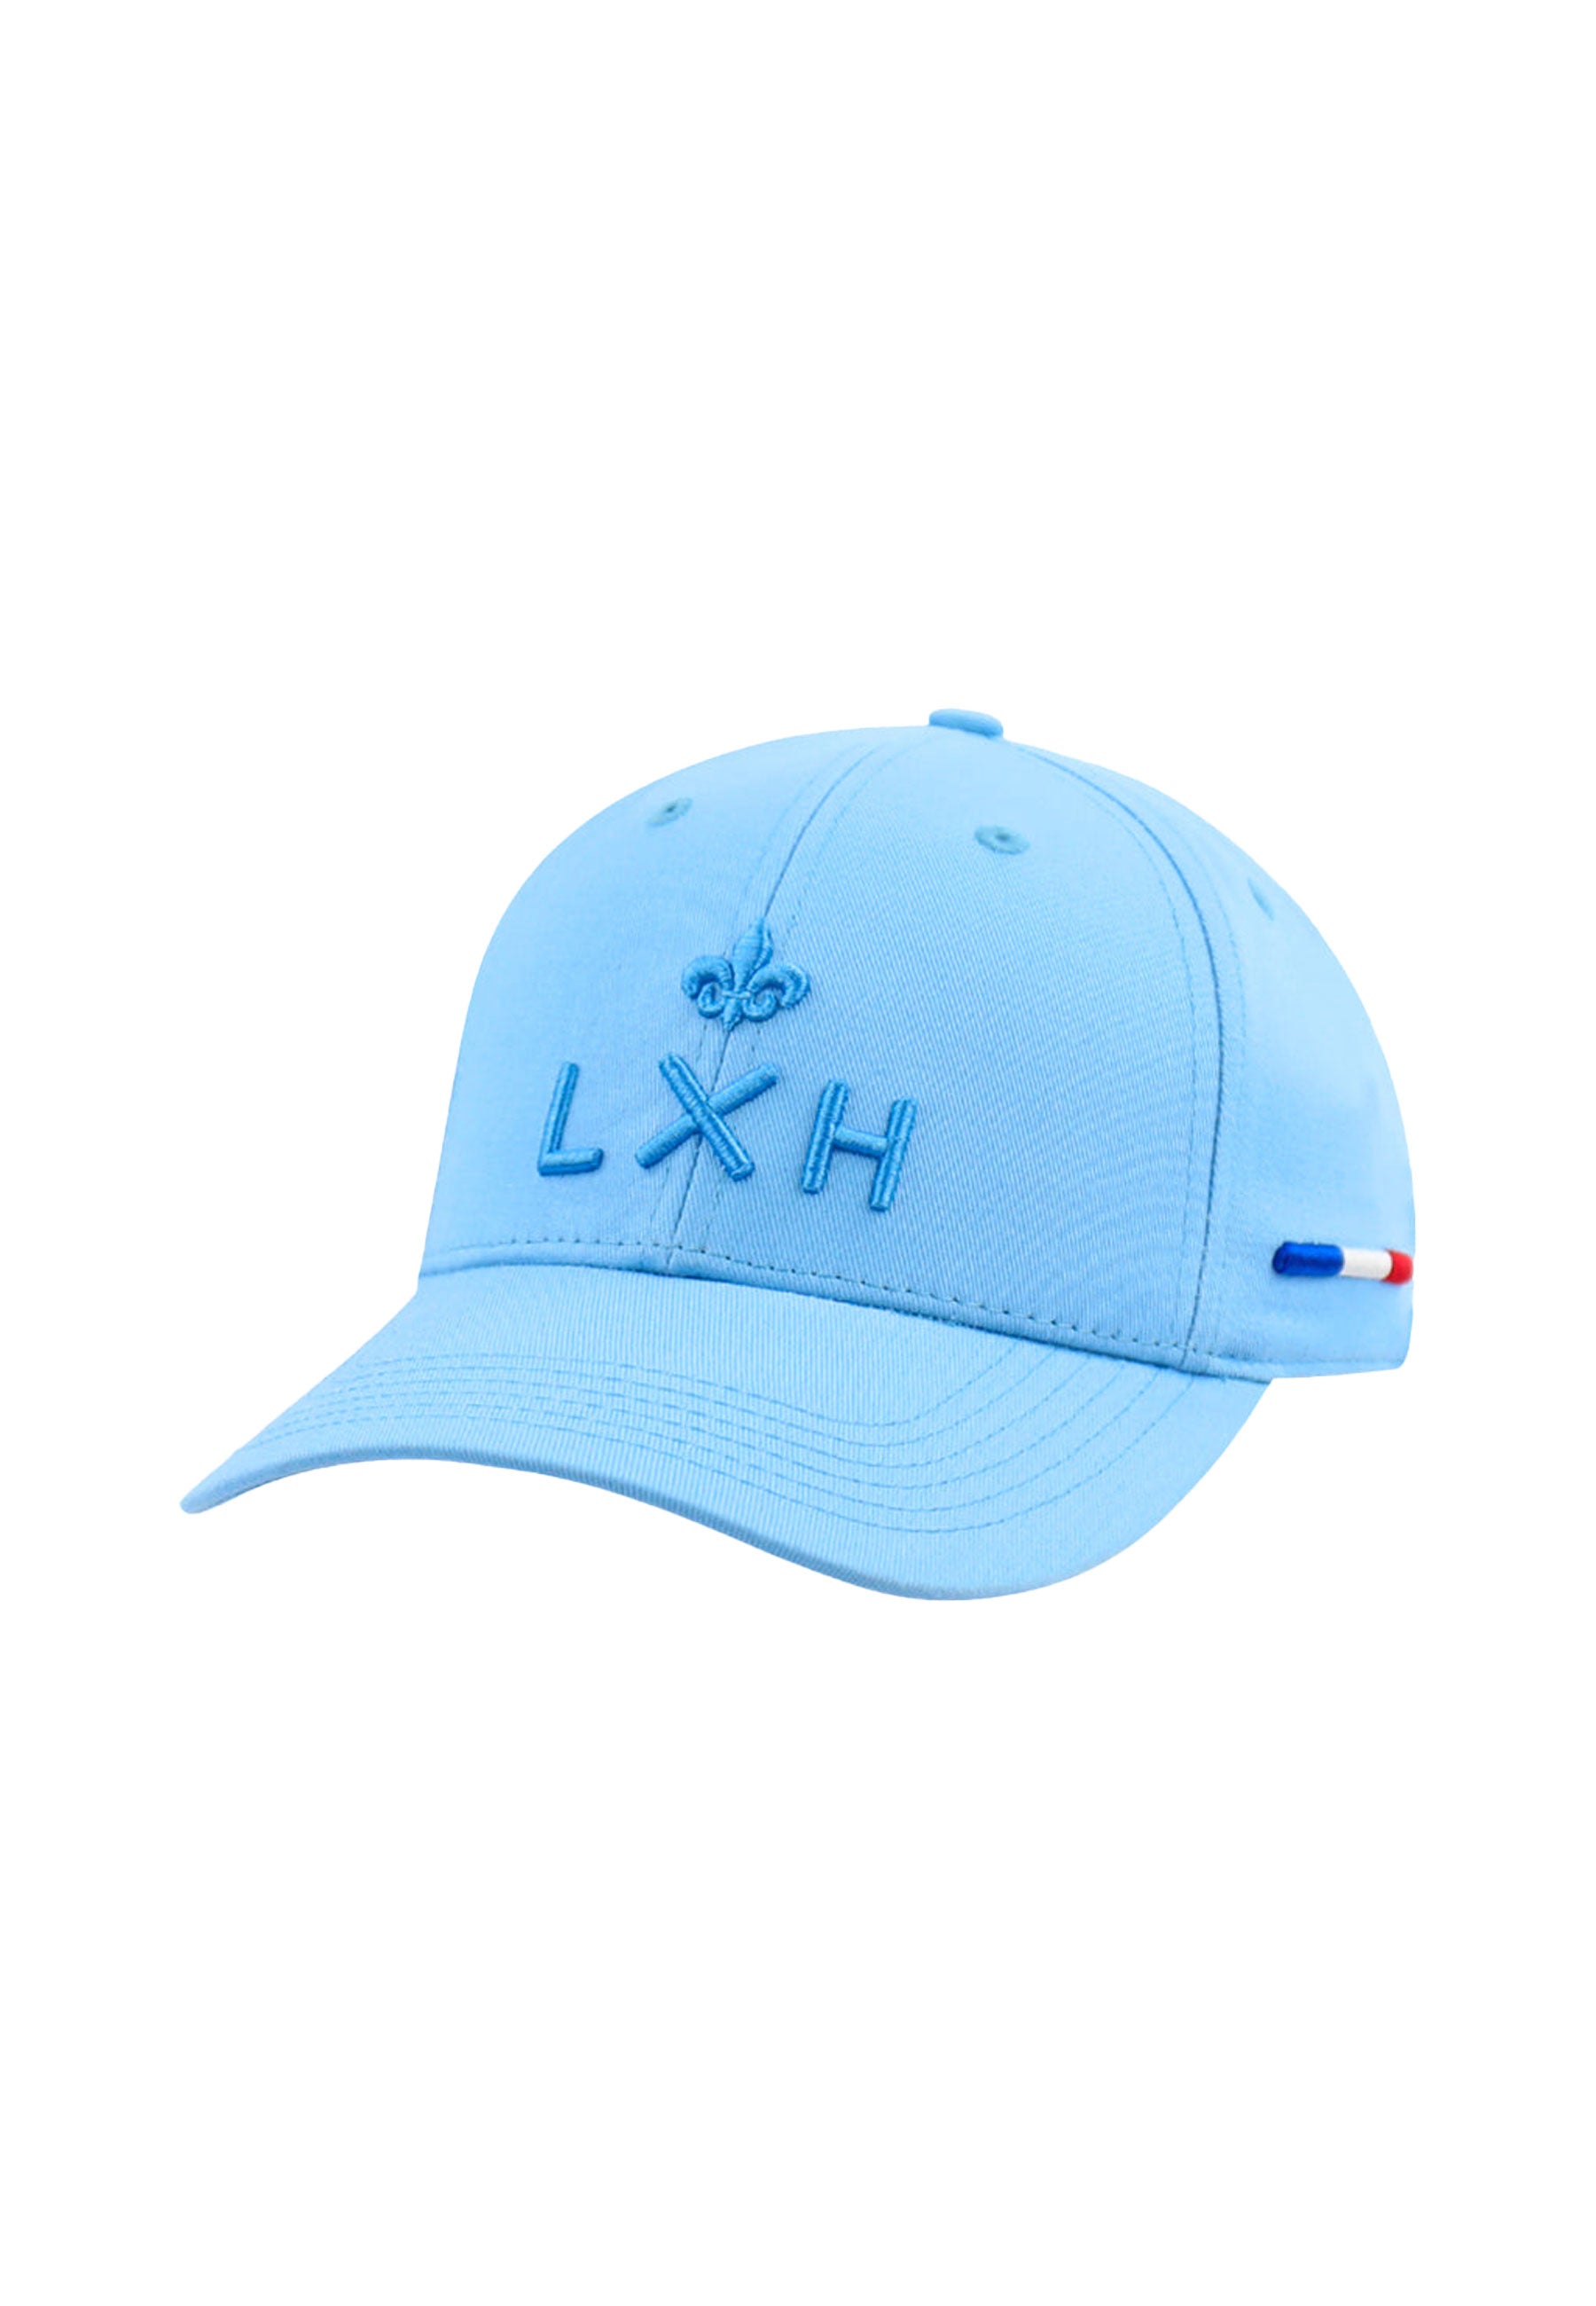 Casquette Pop - La Havane in Bleu Caps LXH   